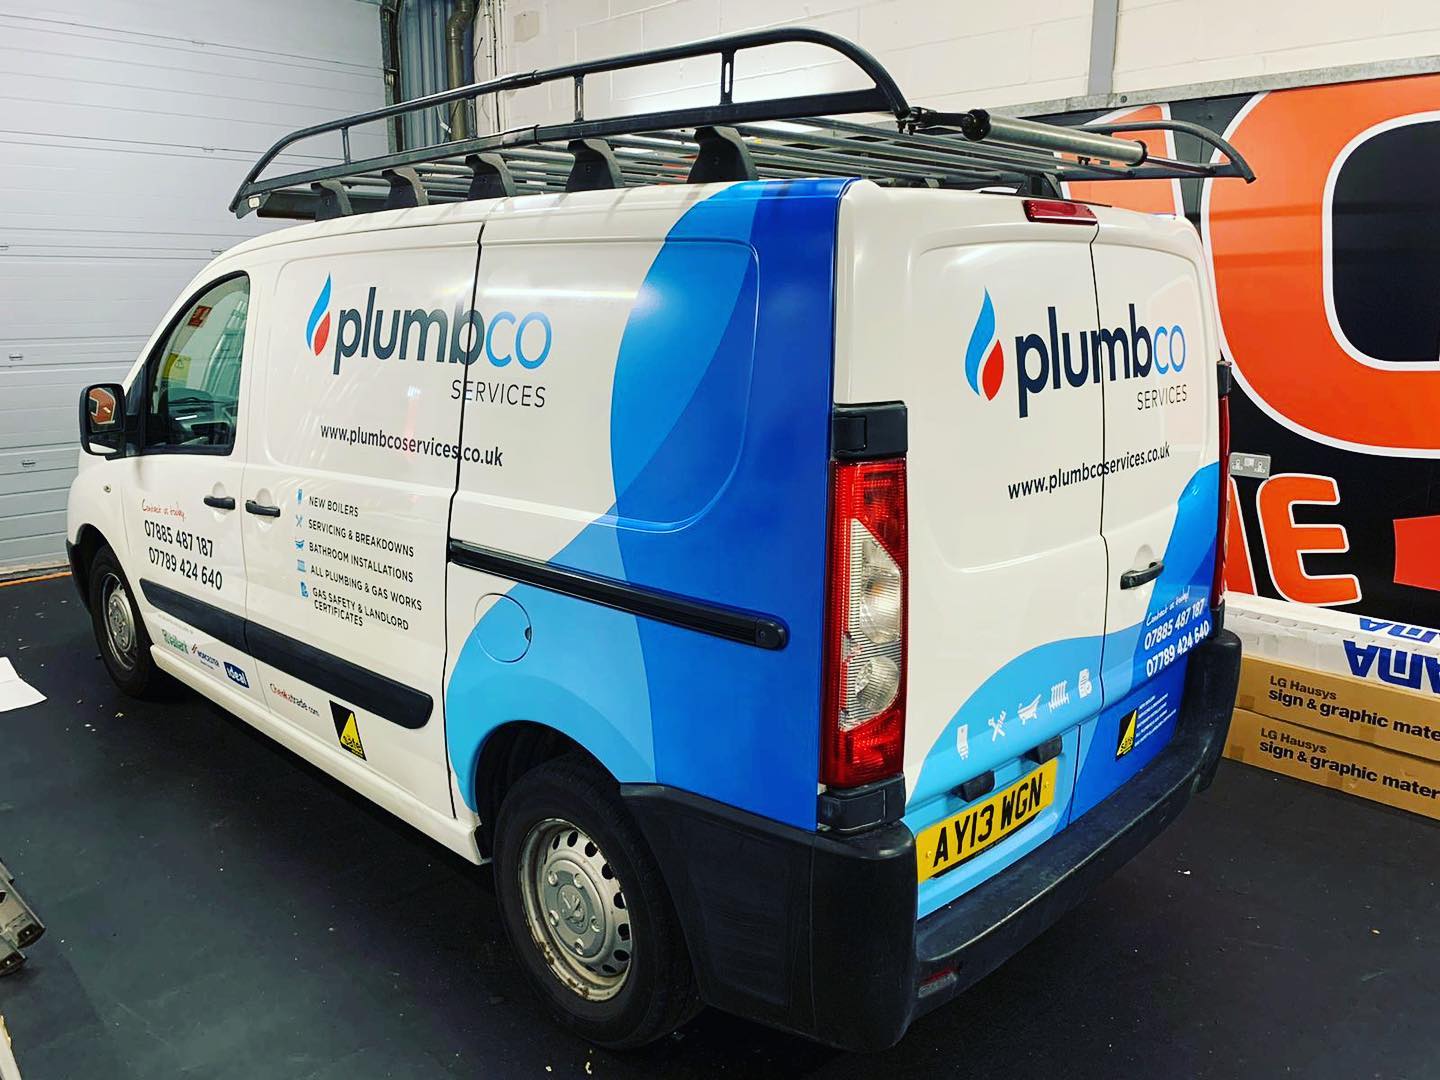 Plumbco Services